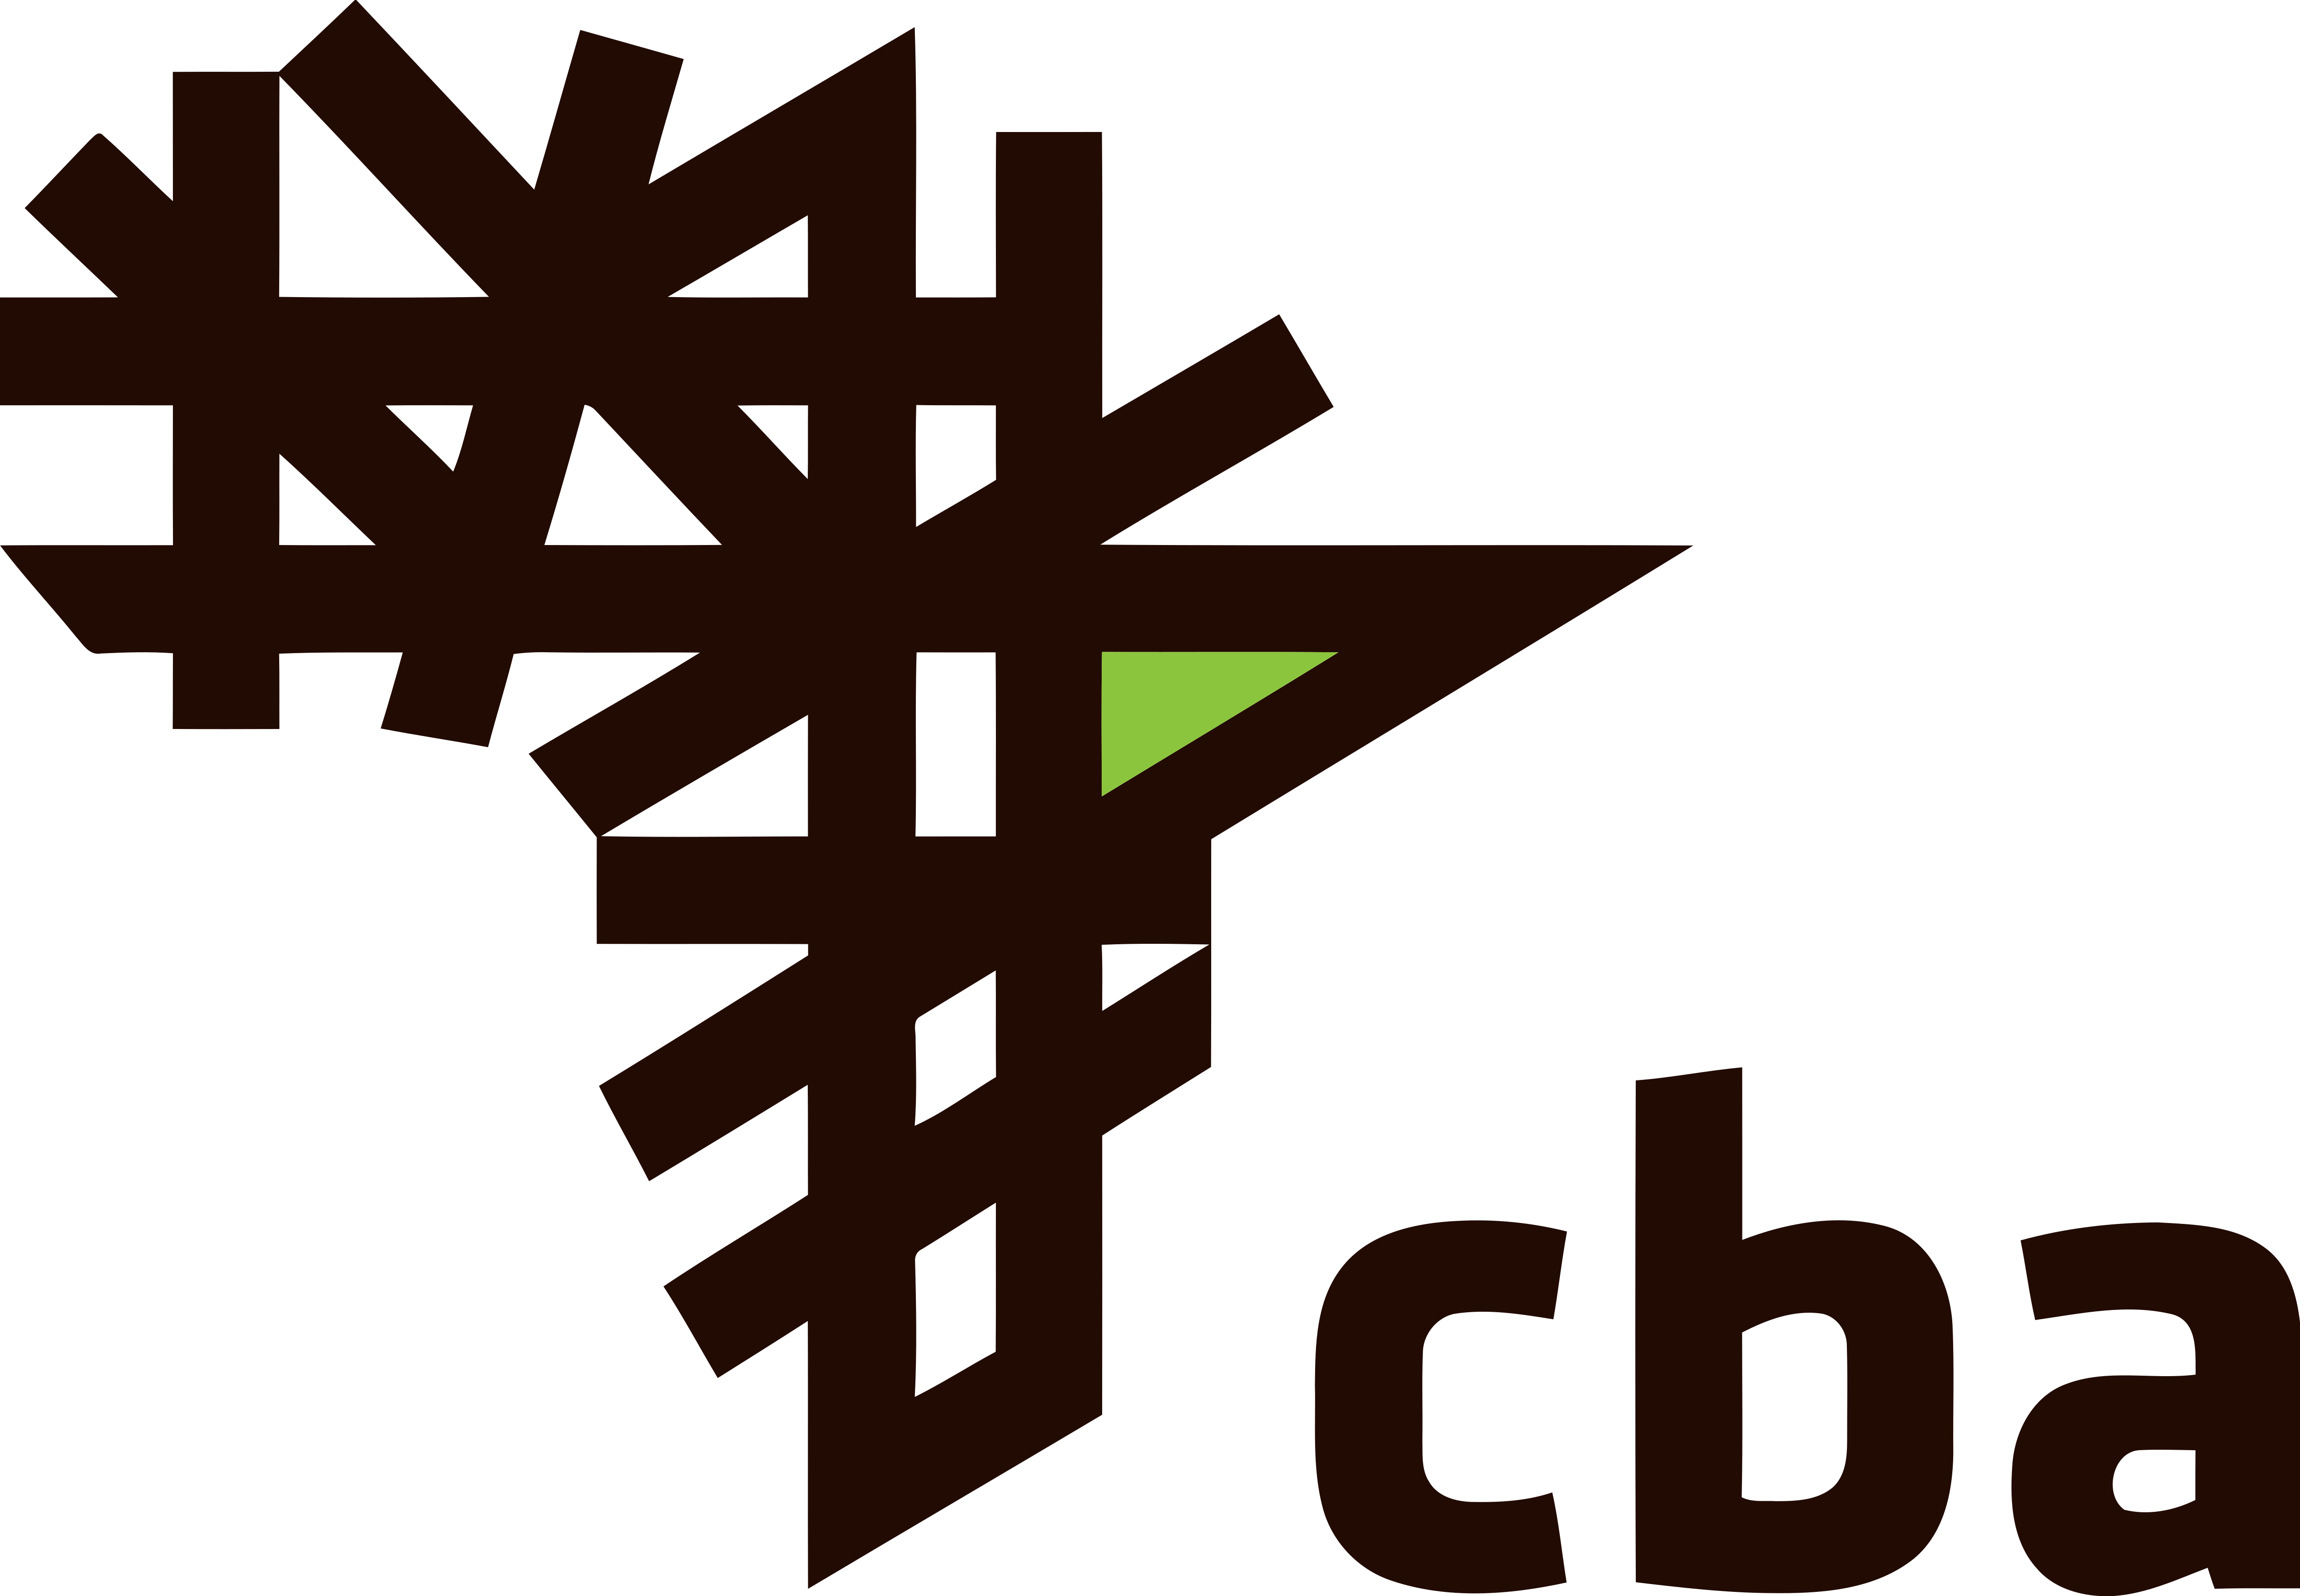 Africa bank. CBA логотип. Logo Bank of Africa. Bank of Africa logo Bank. Логотипы графические банки.